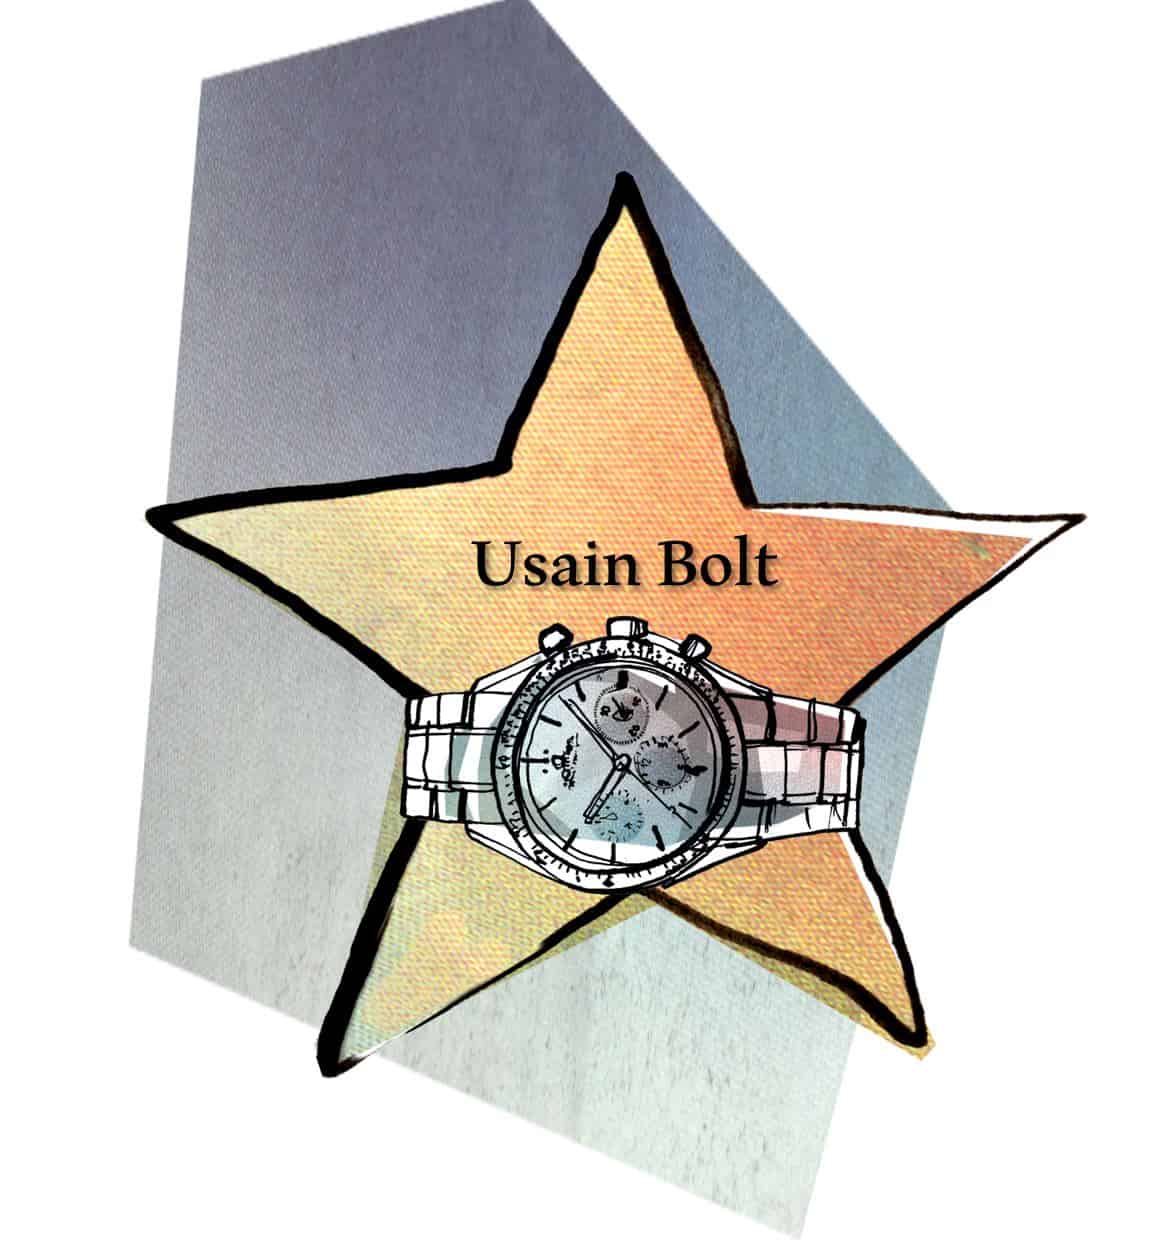 Watch of Fame Usain Bolt